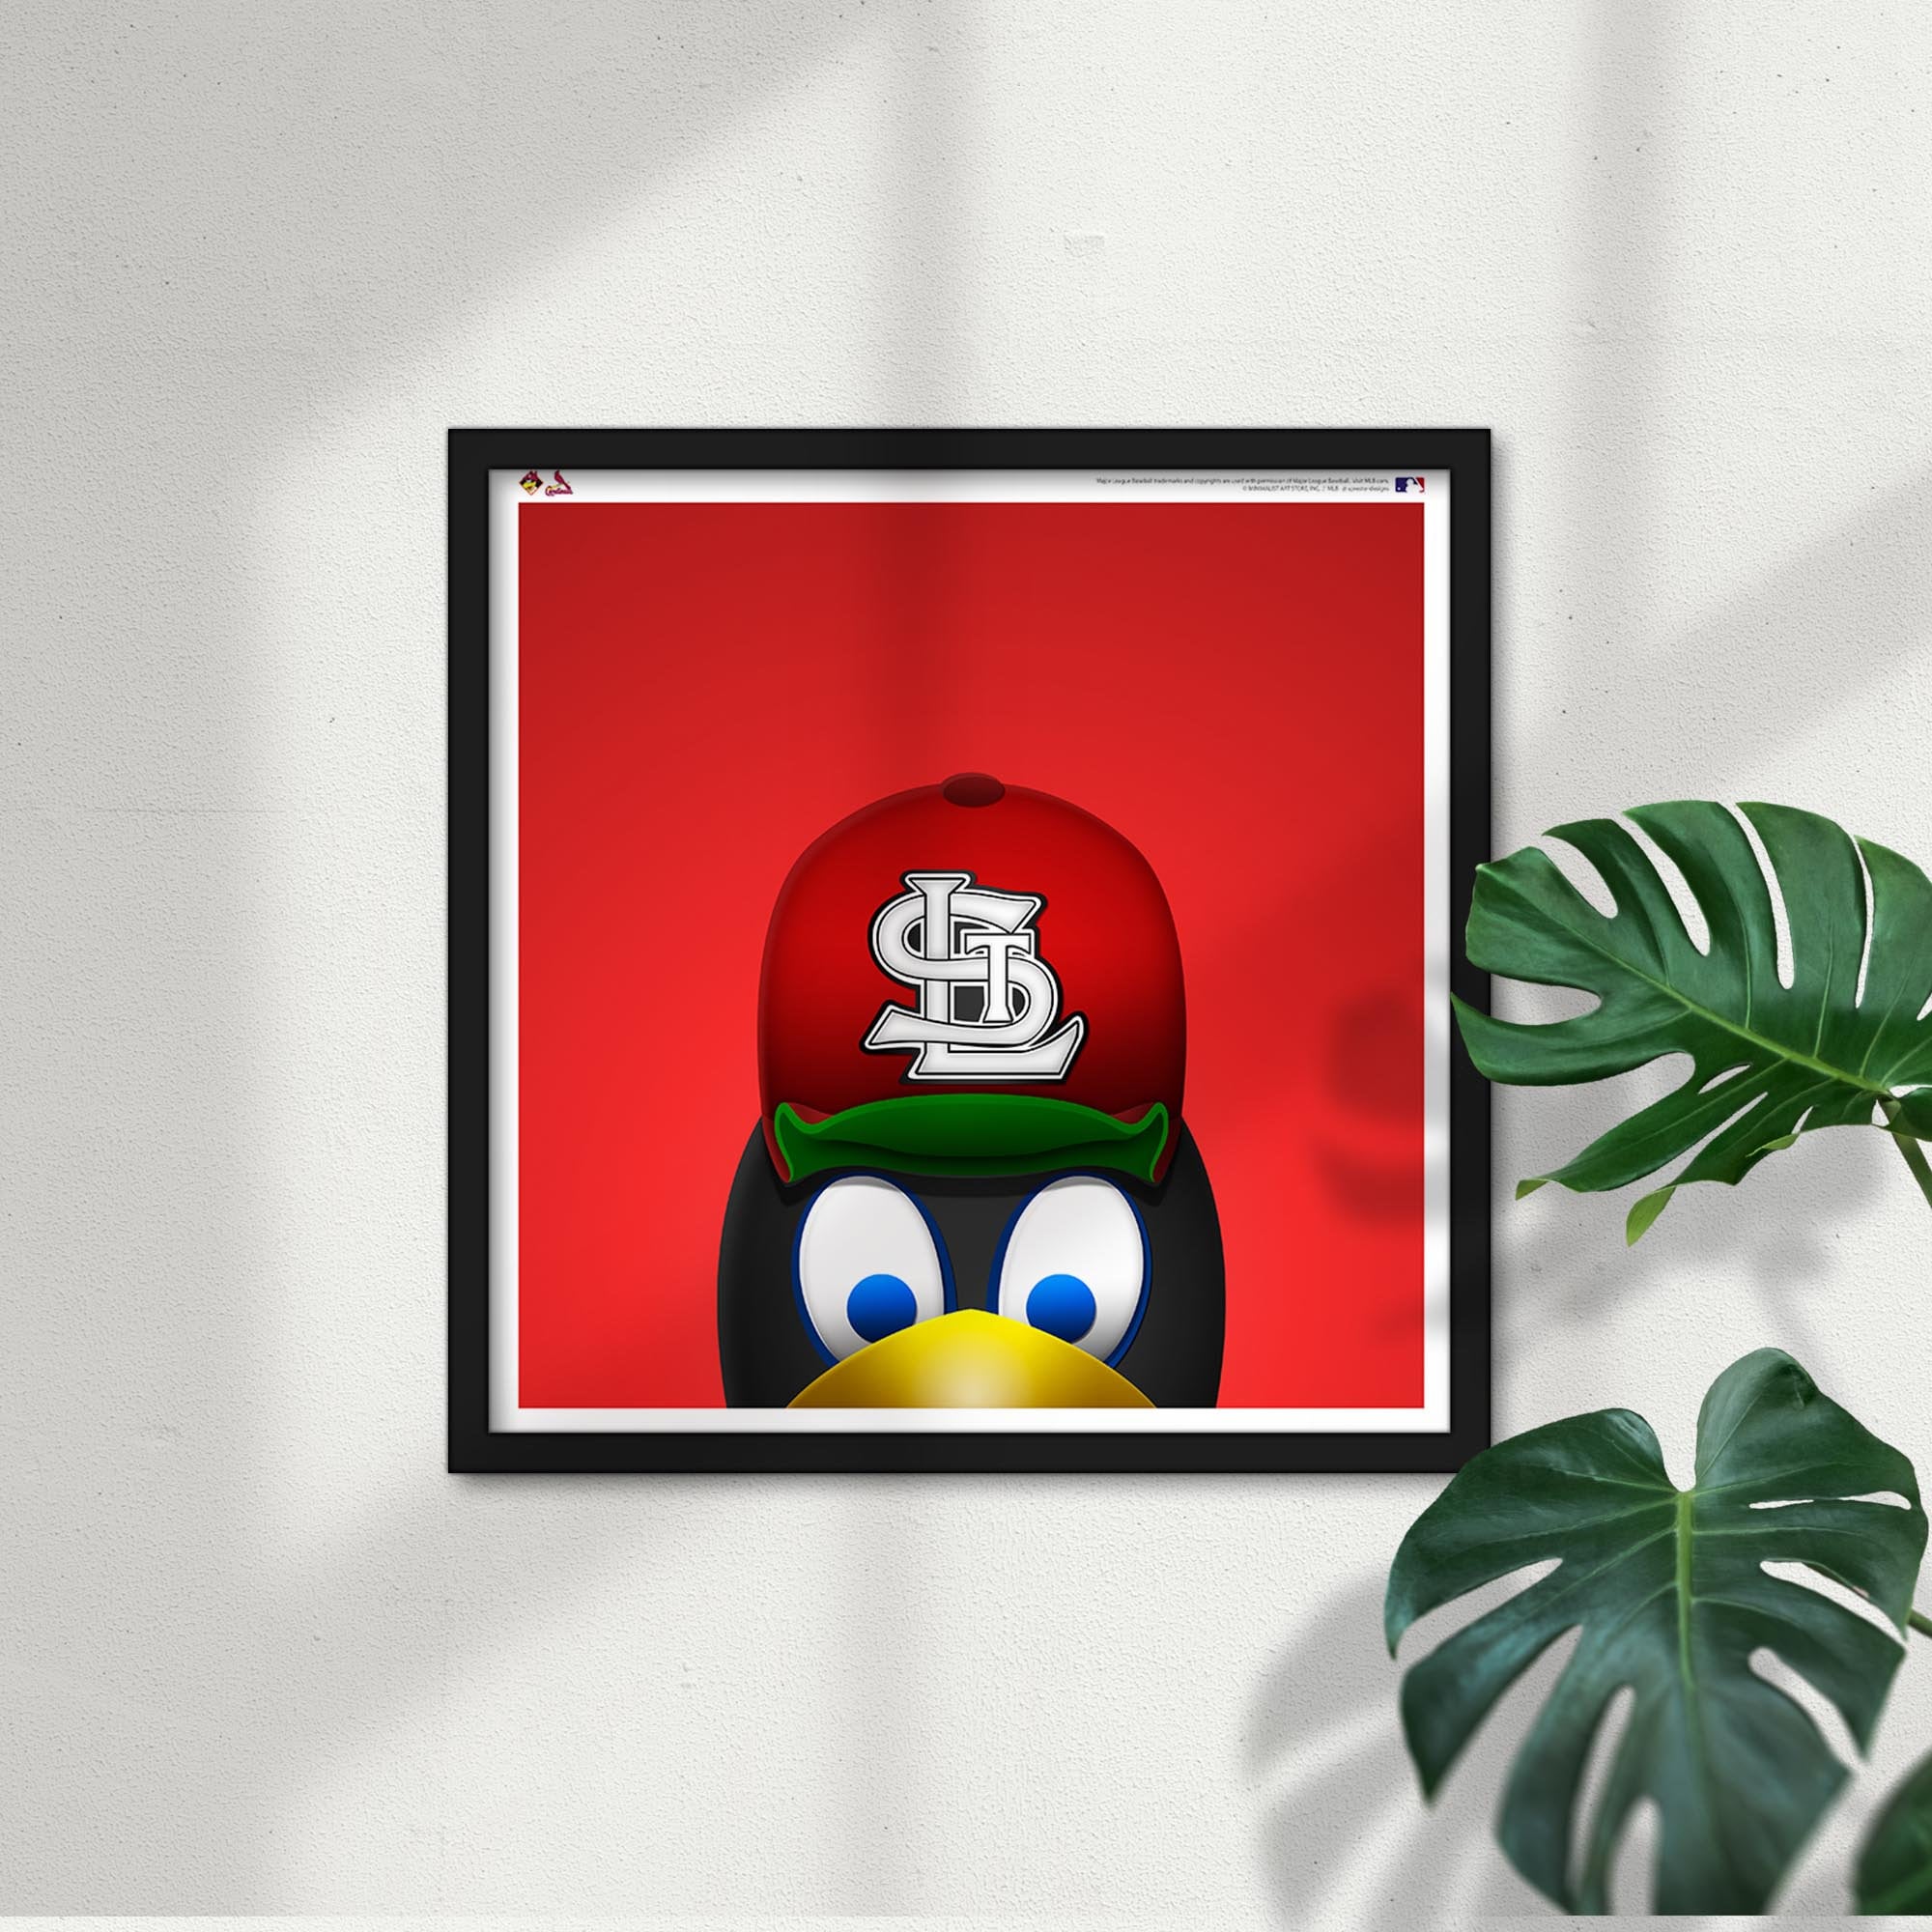 Minimalist Fredbird St. Louis Cardinals Mascot MLB Licensed 